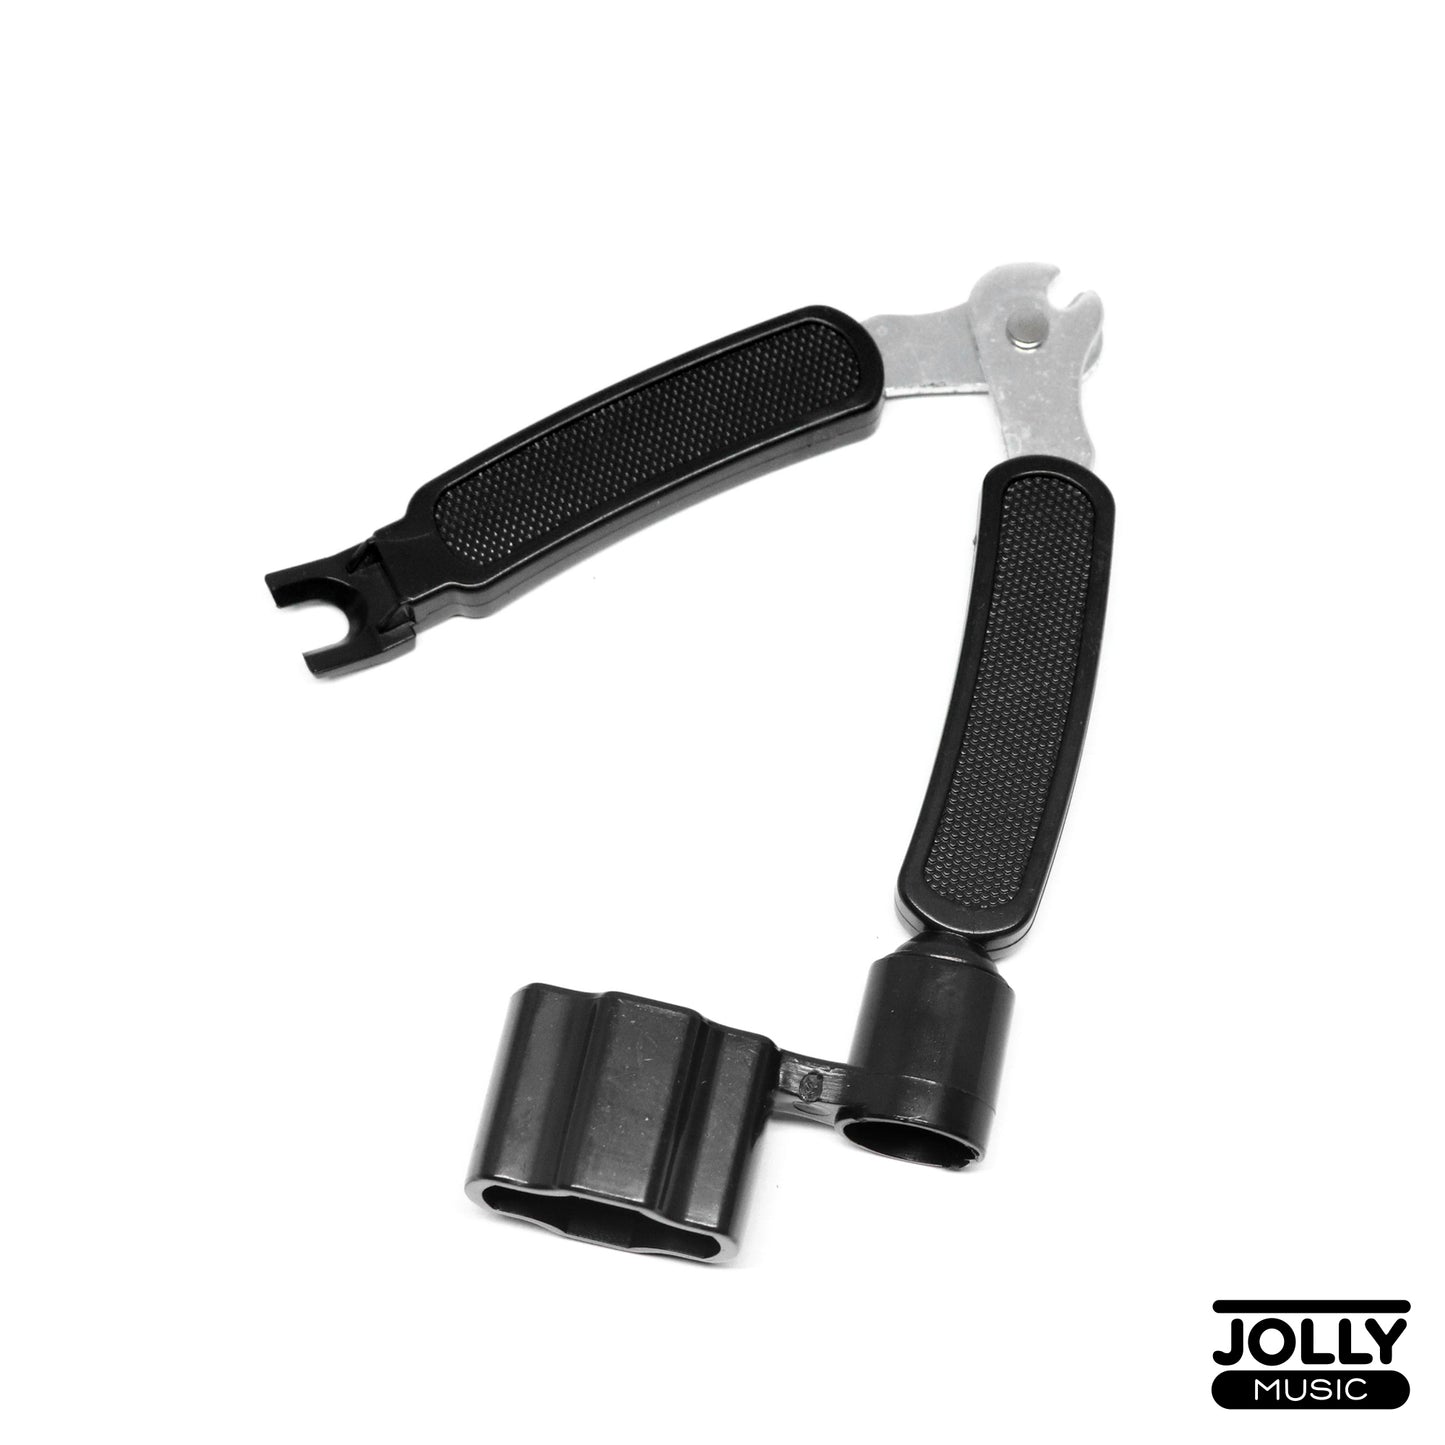 Jolly WINDER01 3-in-1 Peg Winder, Bridge Pin Puller, & String Cutter (Black)